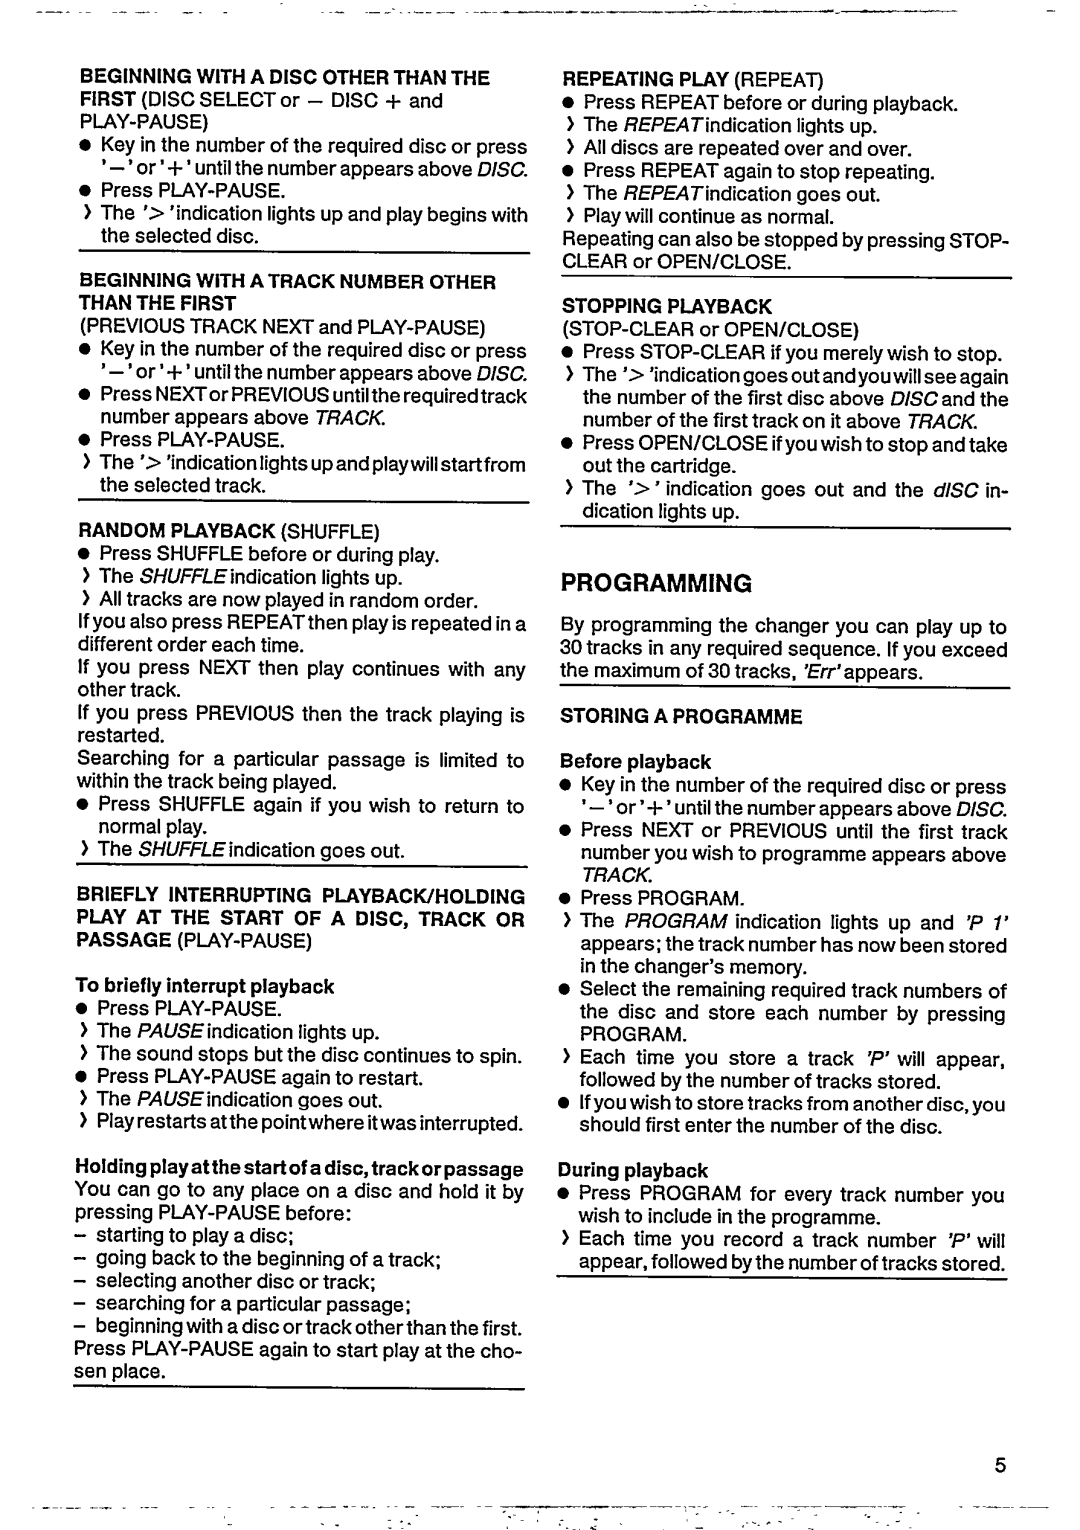 Philips CDC 486 manual 